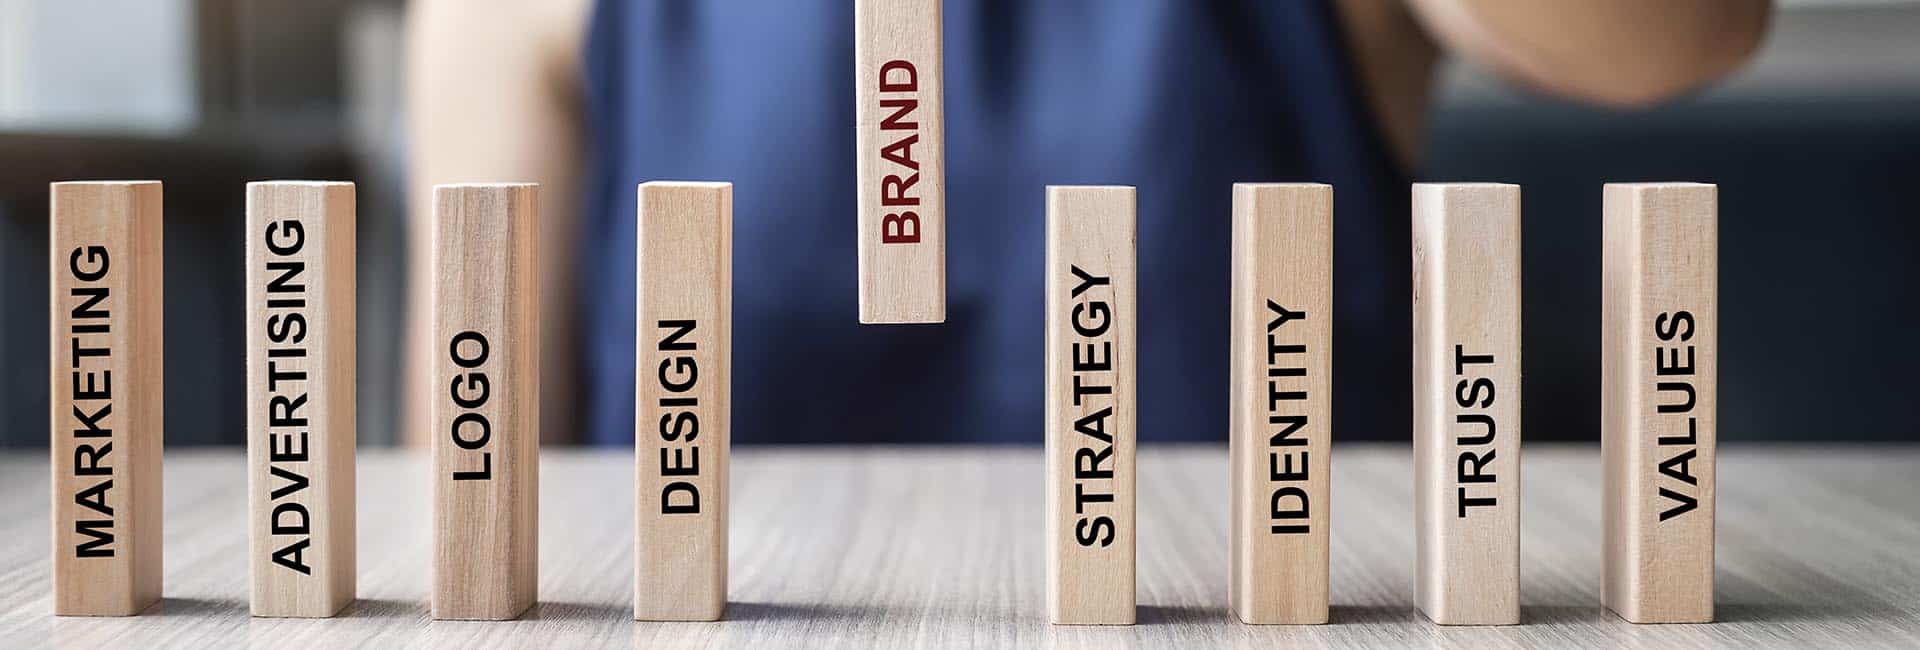 online strategy marketing brand authority